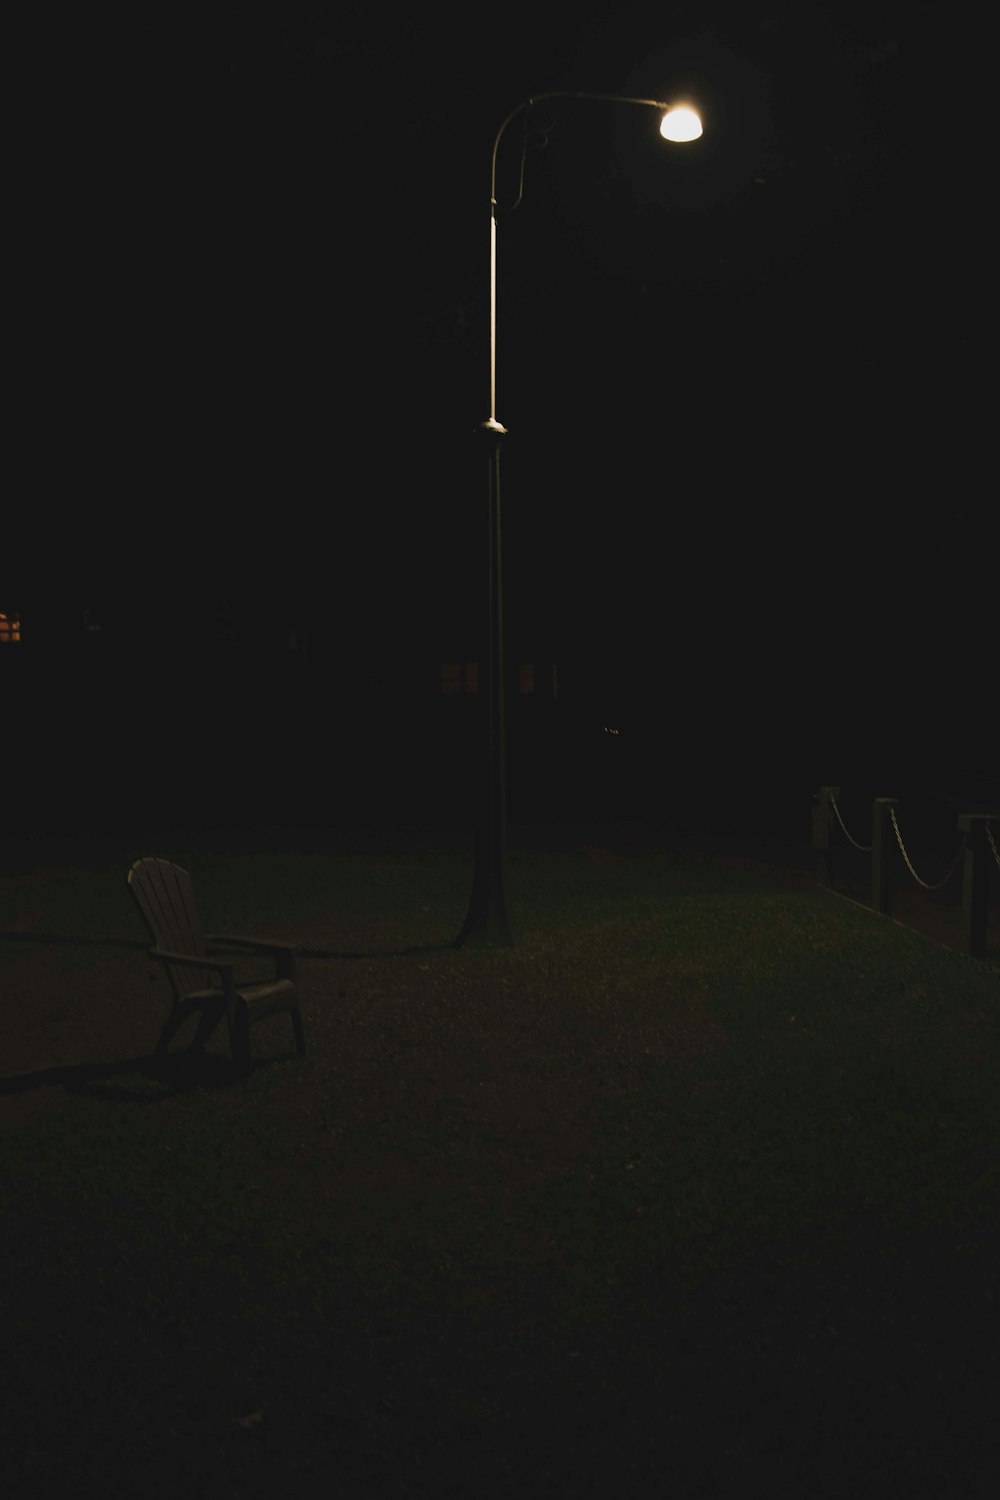 black metal chair near light post during night time